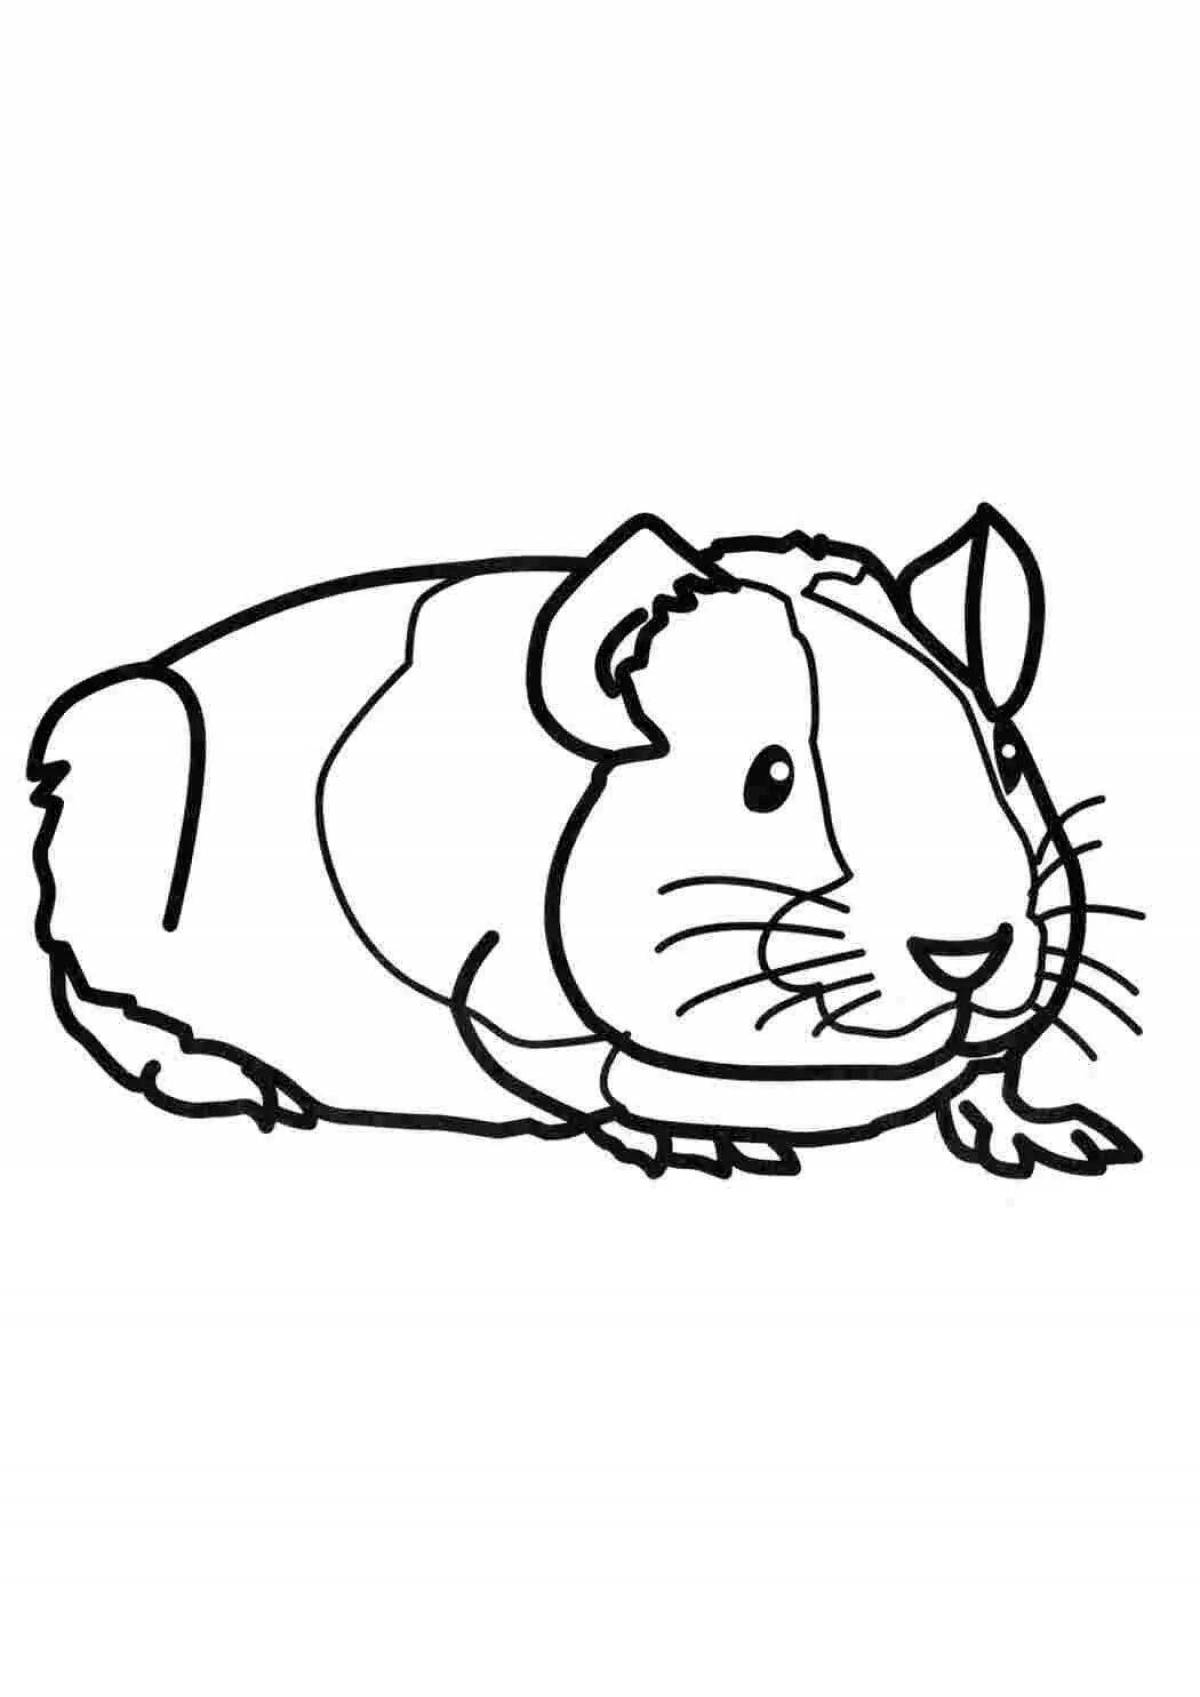 Joyful guinea pig coloring book for kids